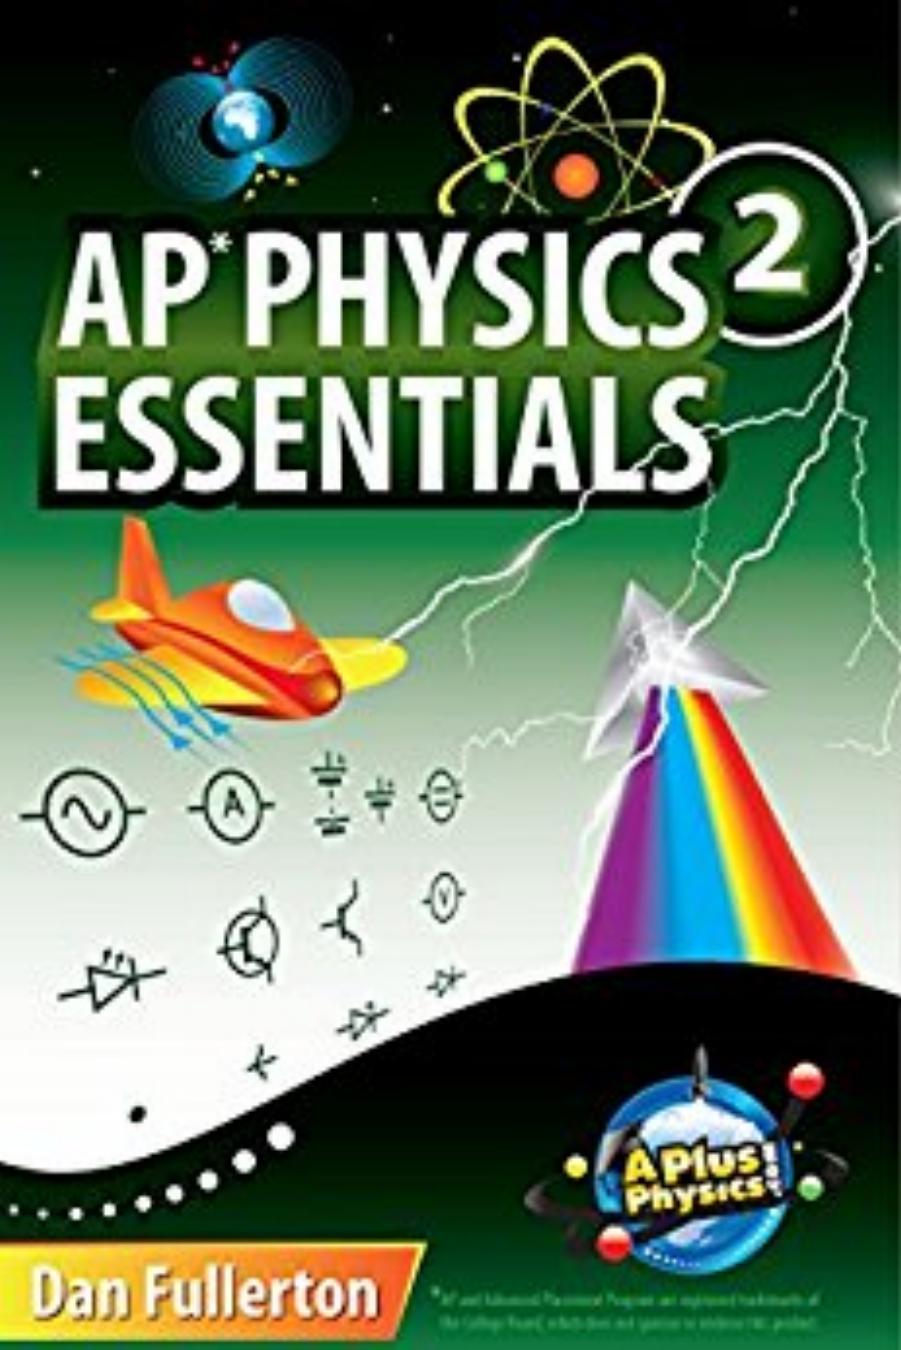 AP Physics 2 Essentials An APlusPhysics Guide.jpg